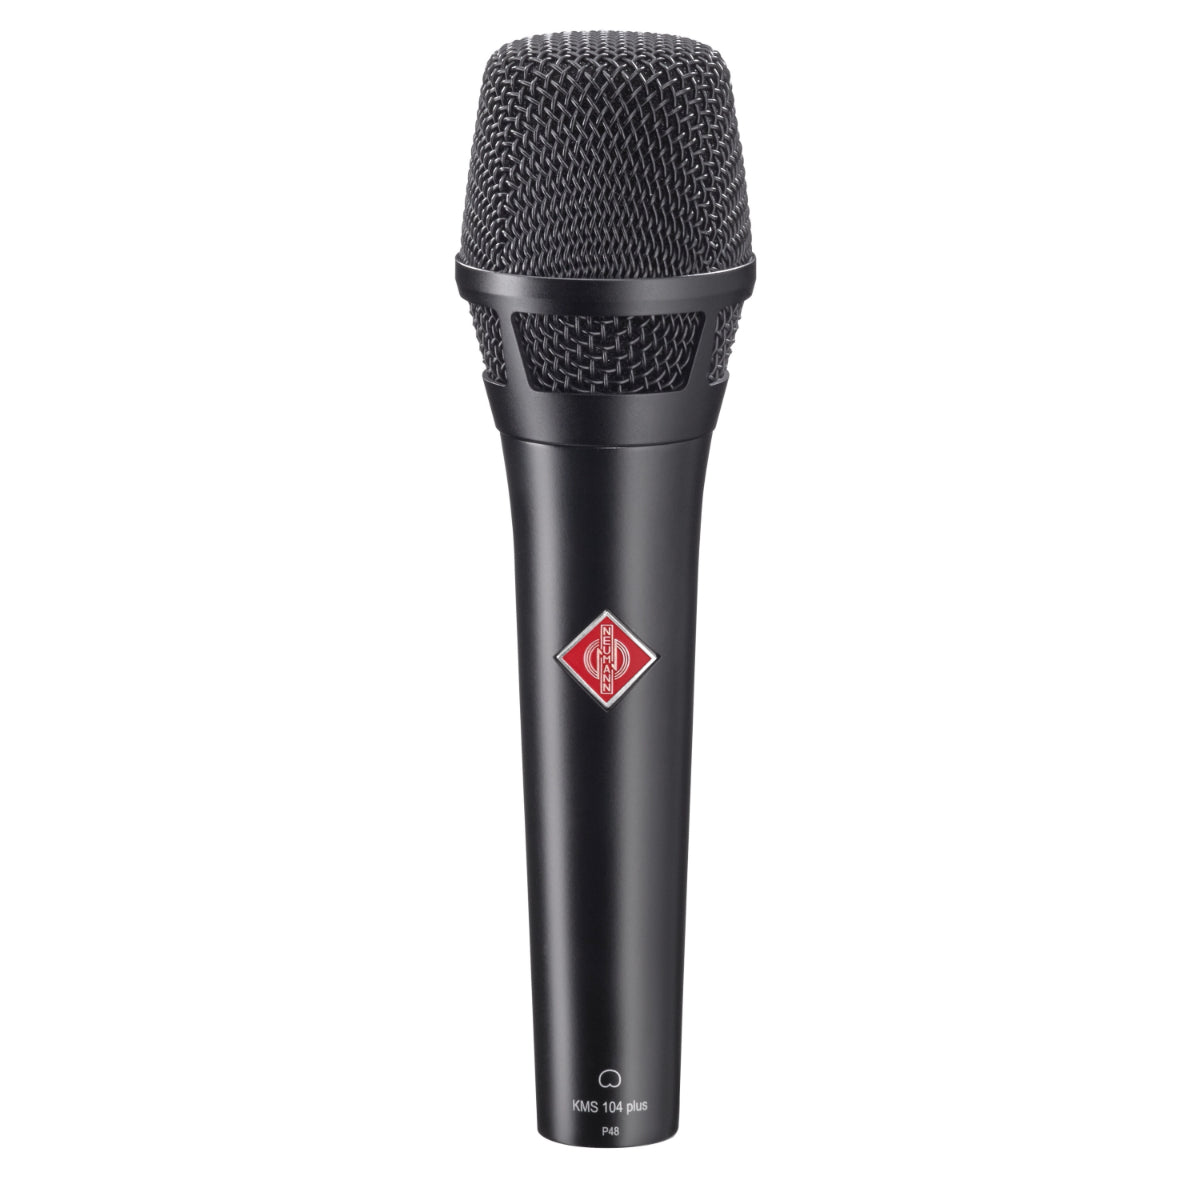 Neumann KMS 104 PLUS BK Vocalist Microphone, Cardioid, Black, Condenser Microphone Capsule, SG 105